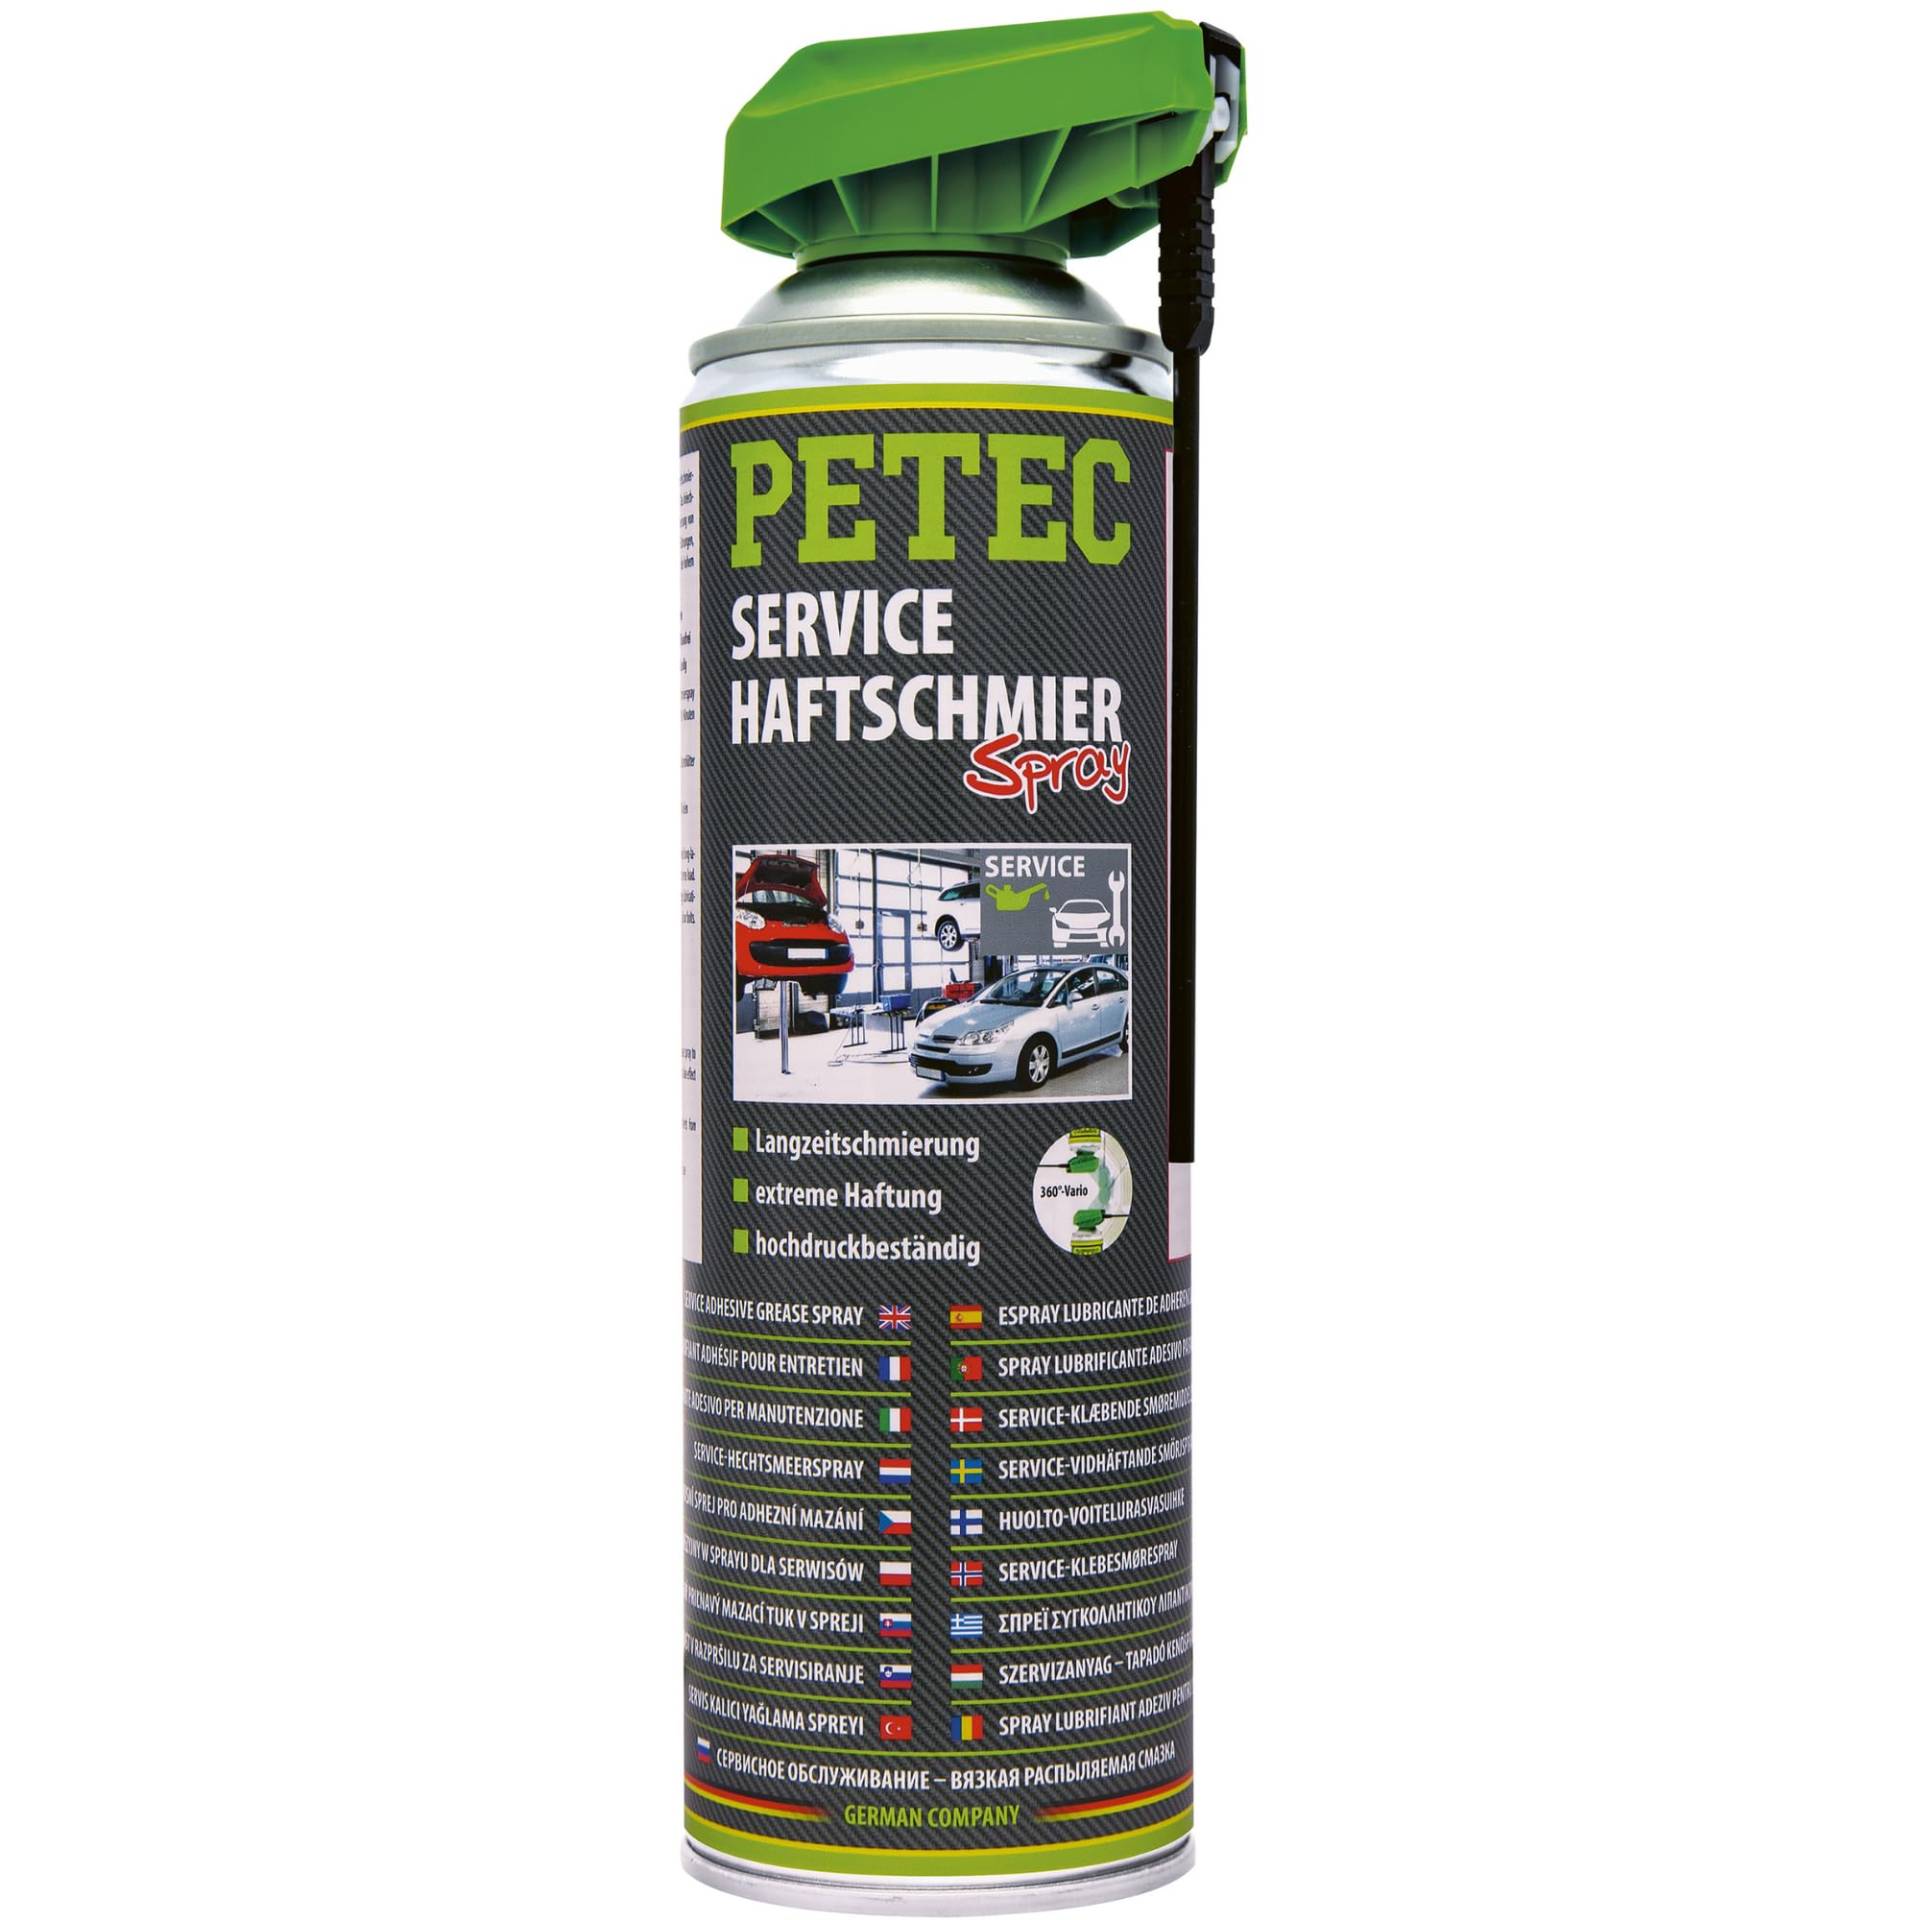 PETEC Service-Haftschmierspray, 500 ml 71550 von PETEC